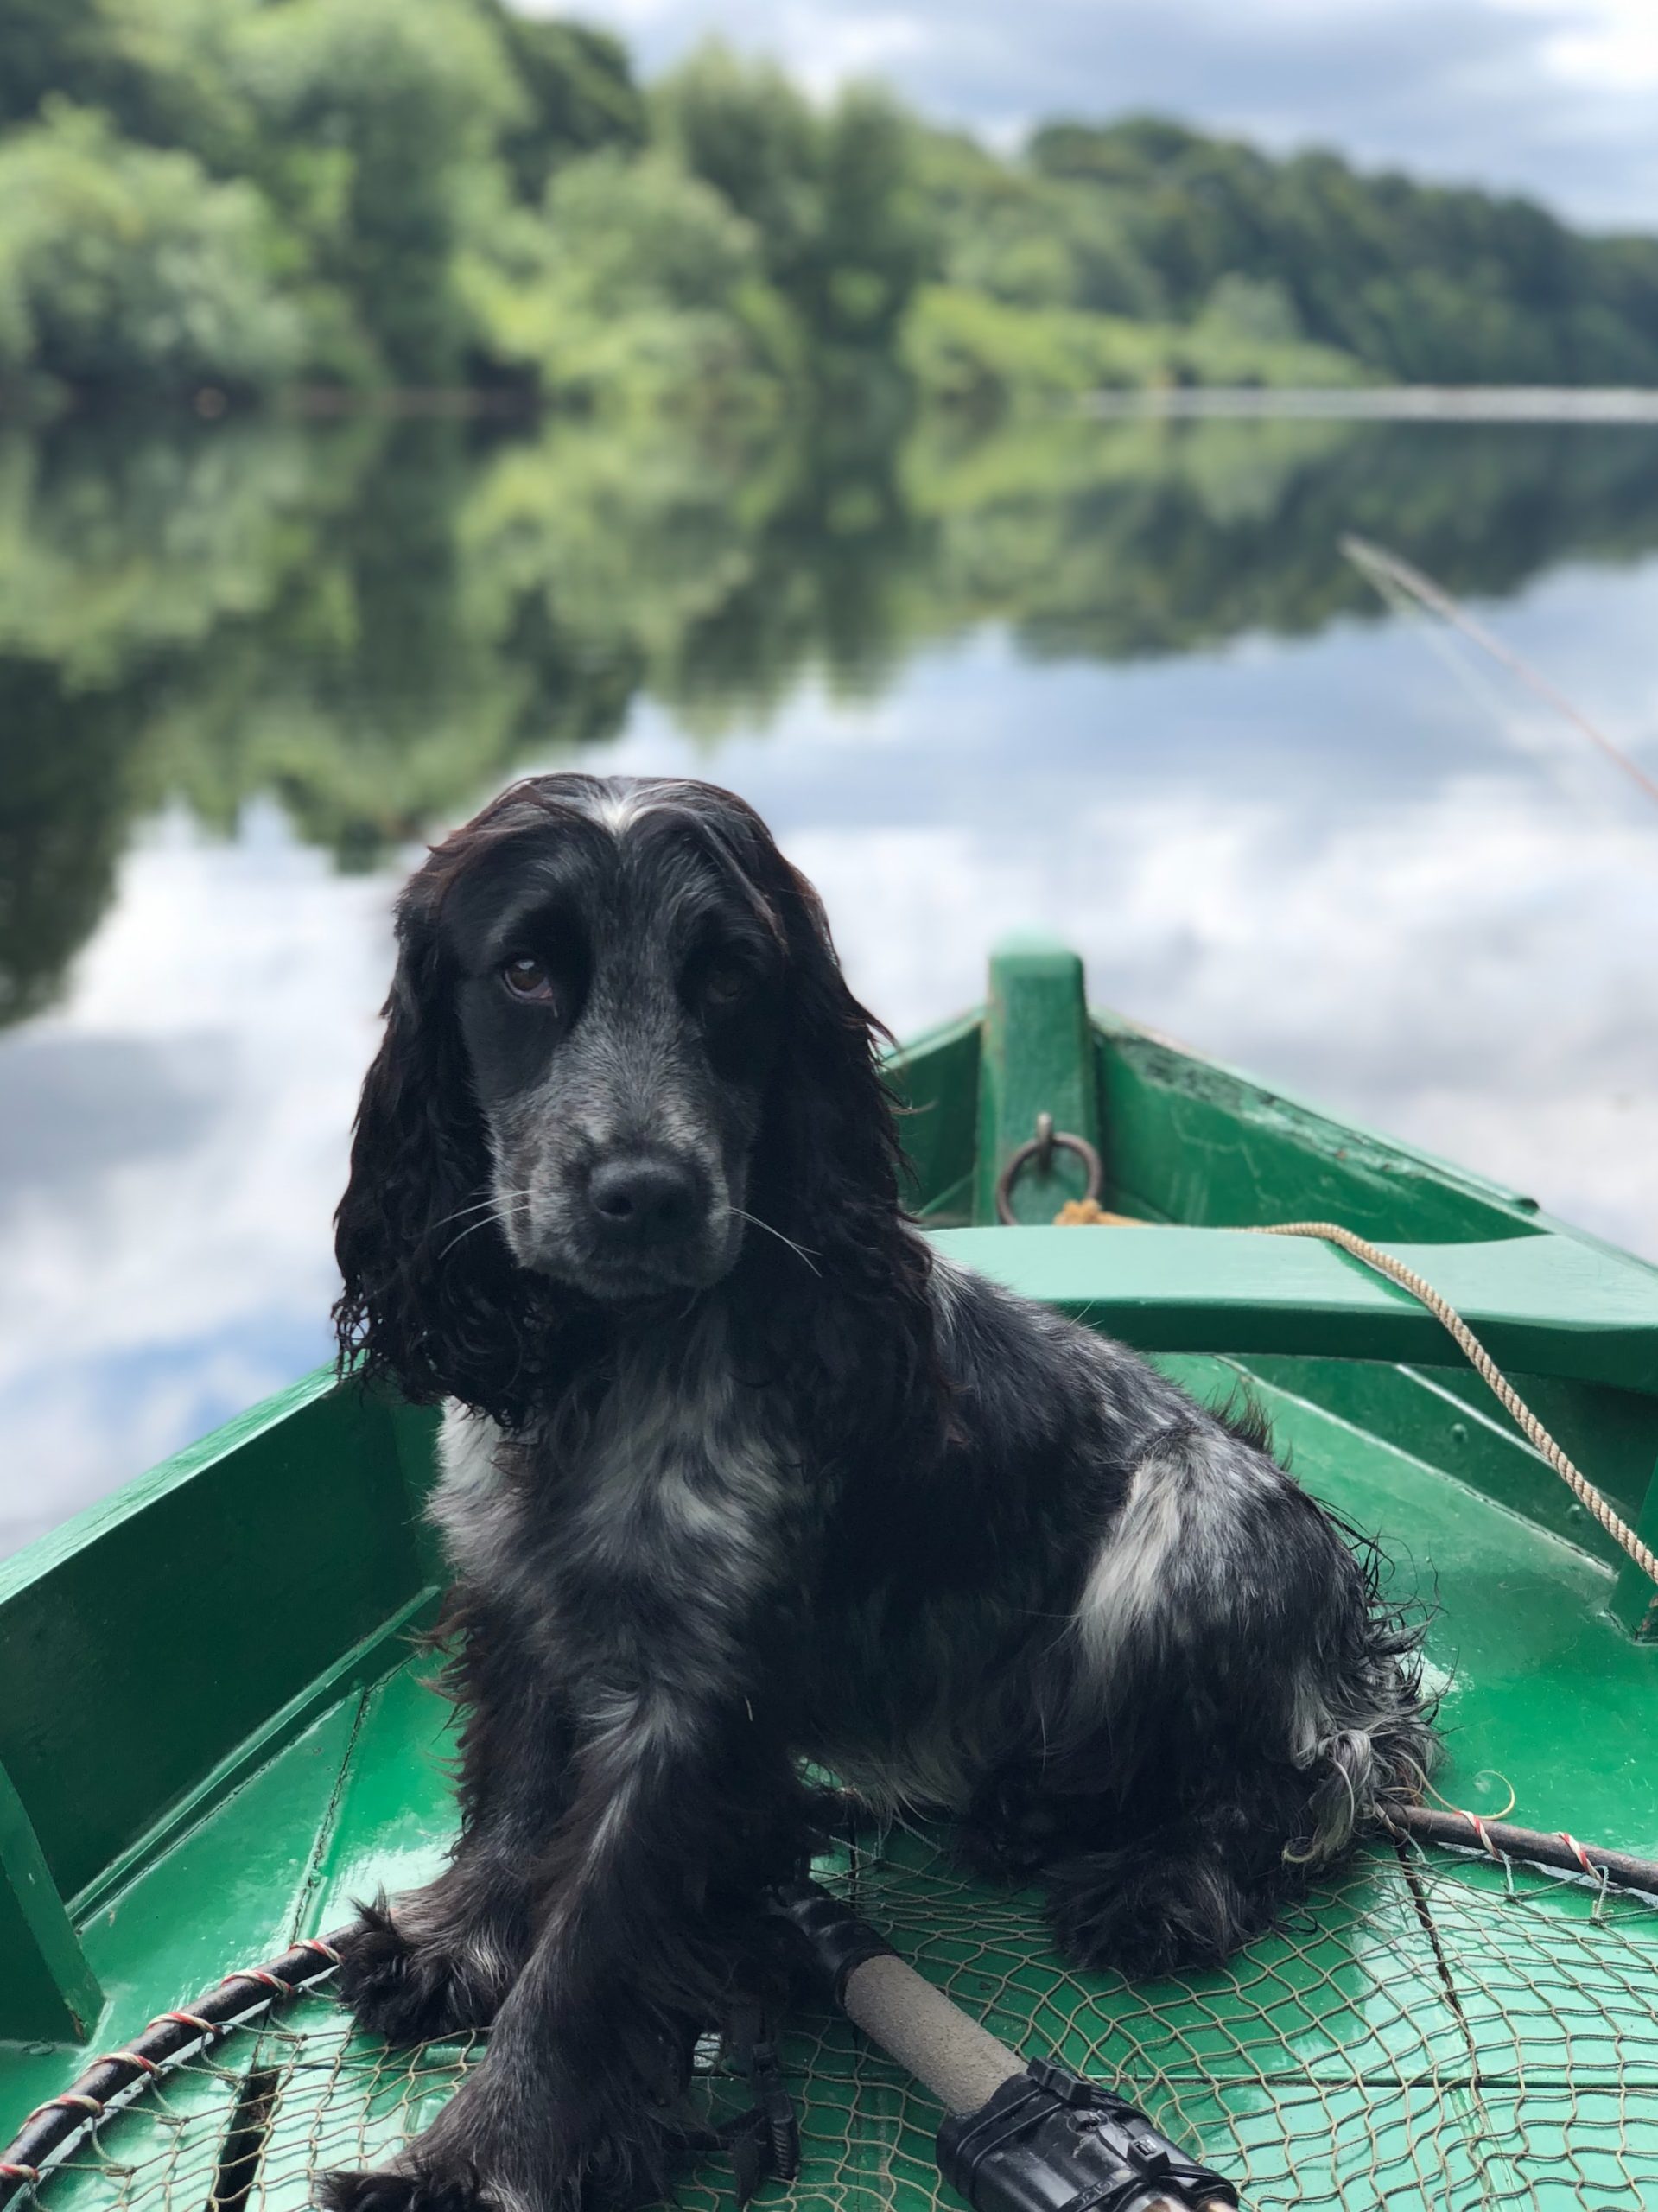 Spaniel dog sitting in a green canoe on a lake